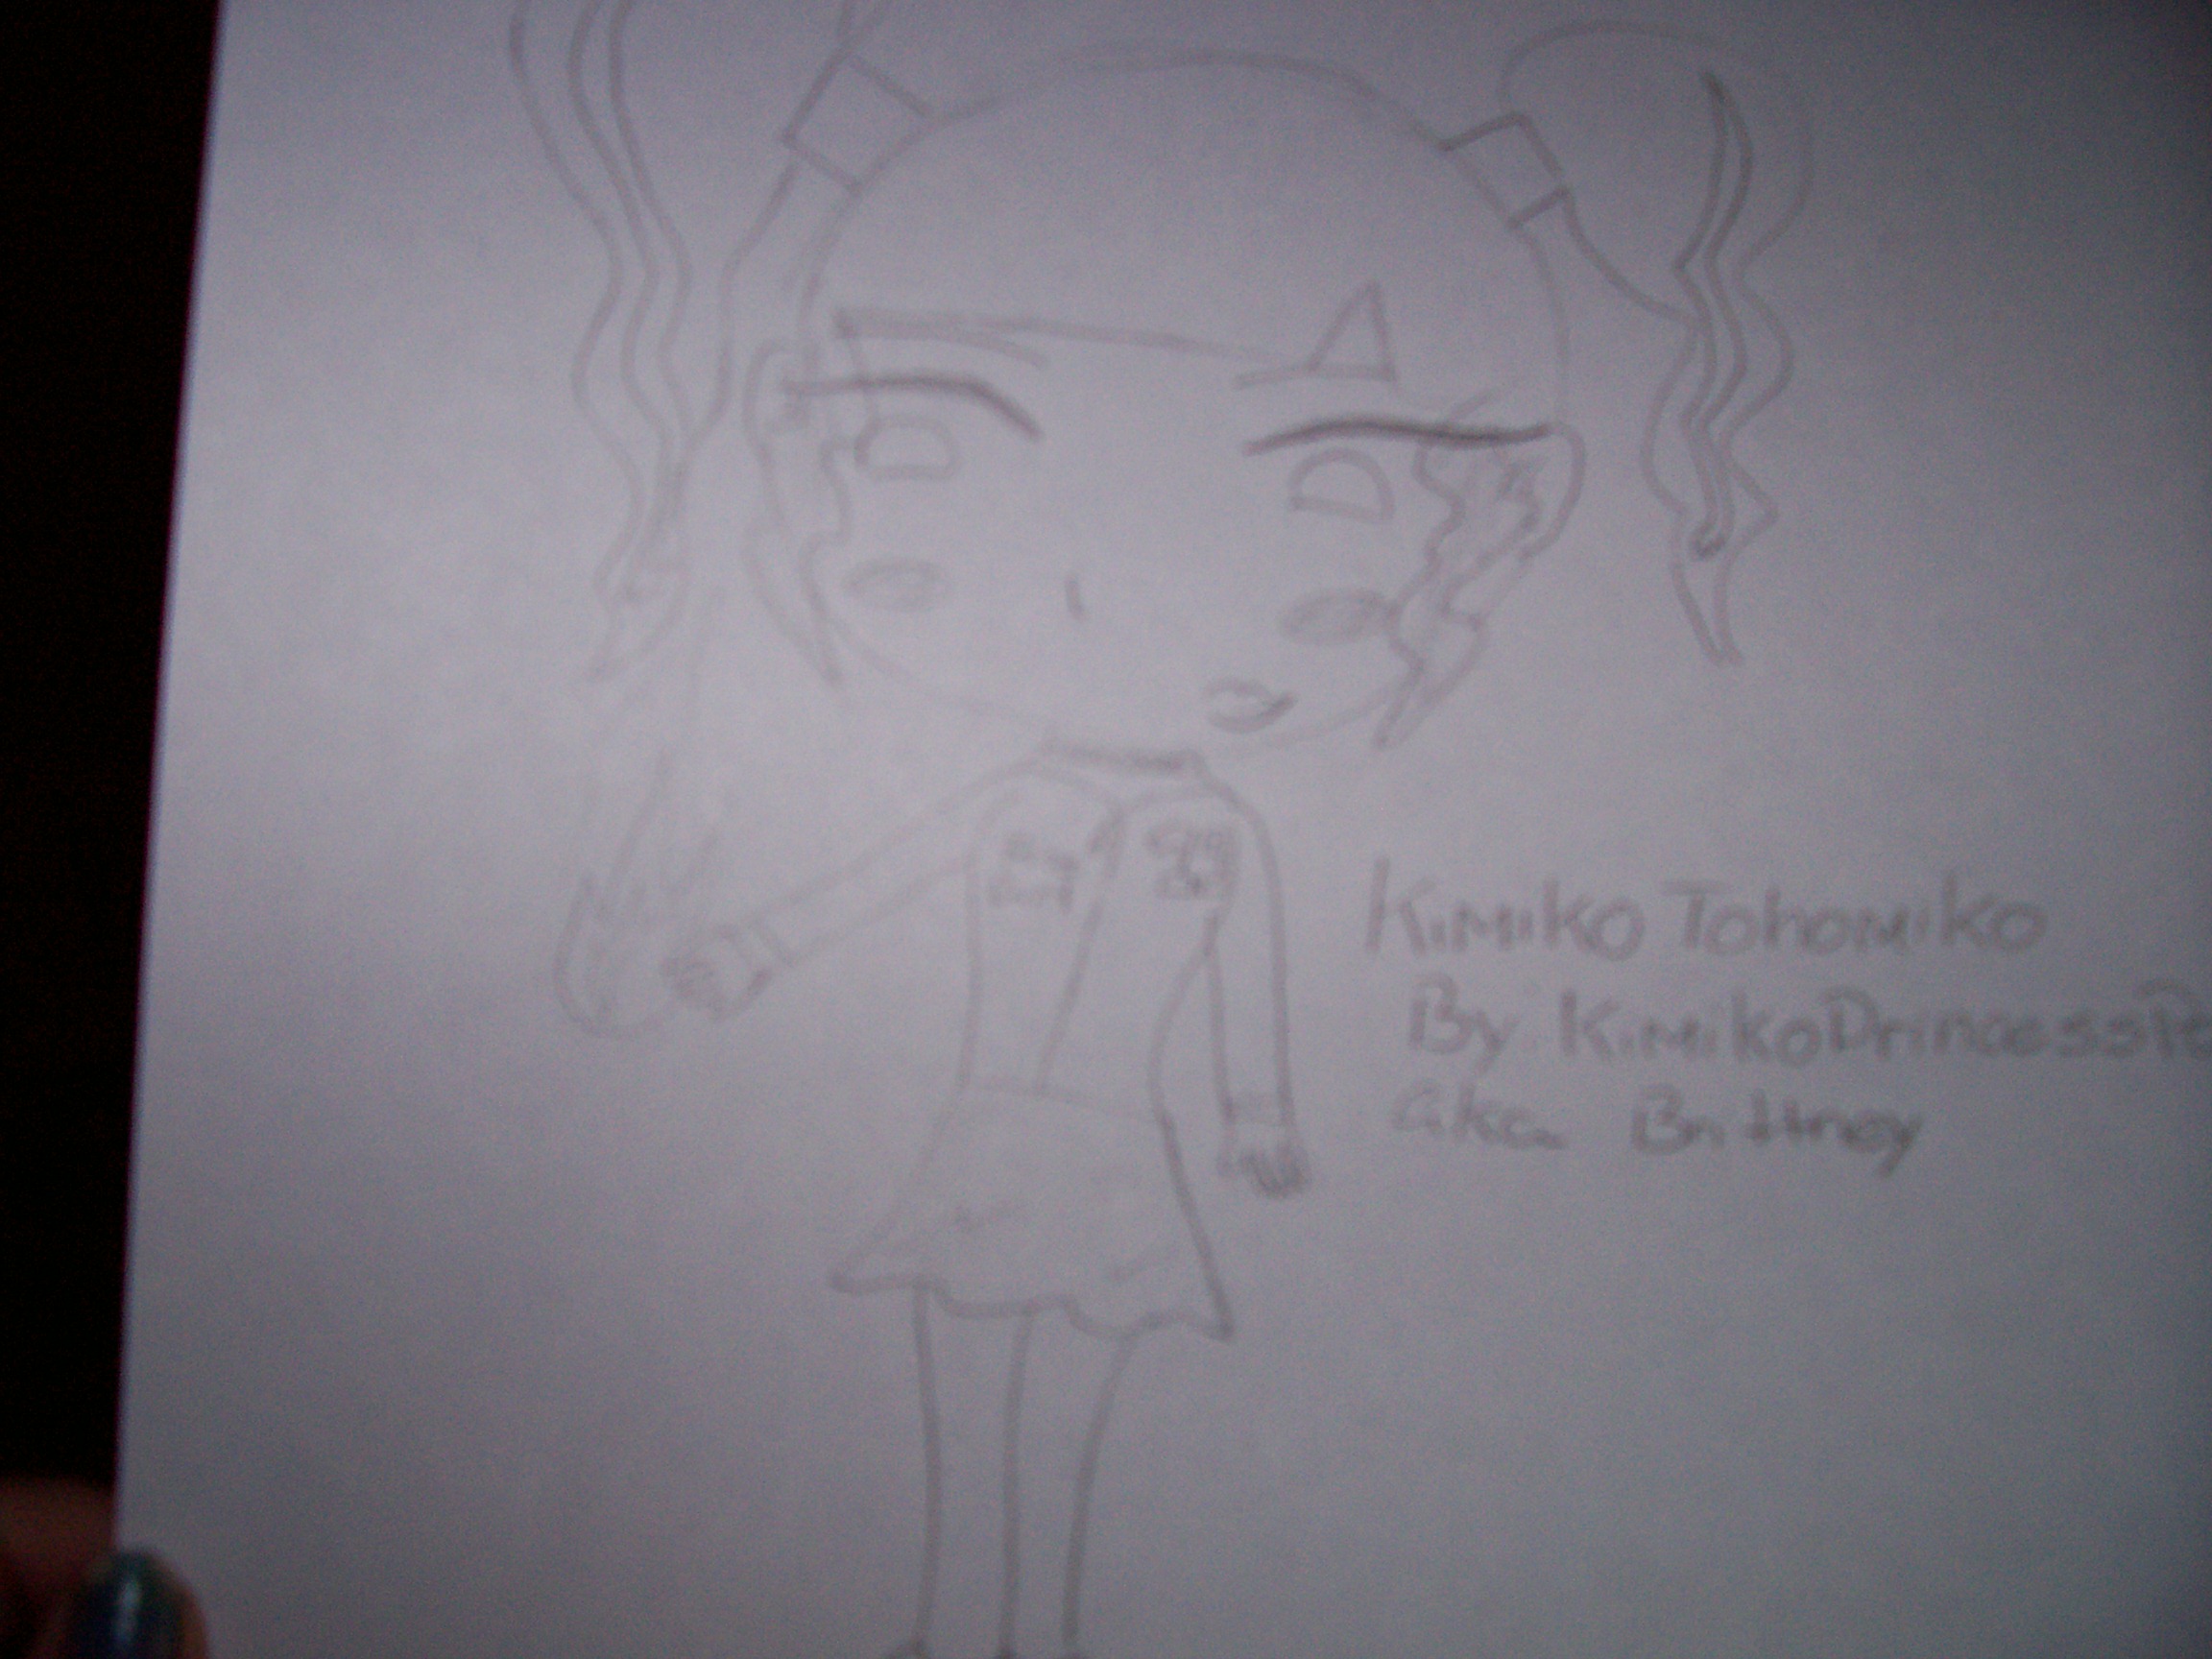 Kimiko the fire girl by Kimikoprincesspancho